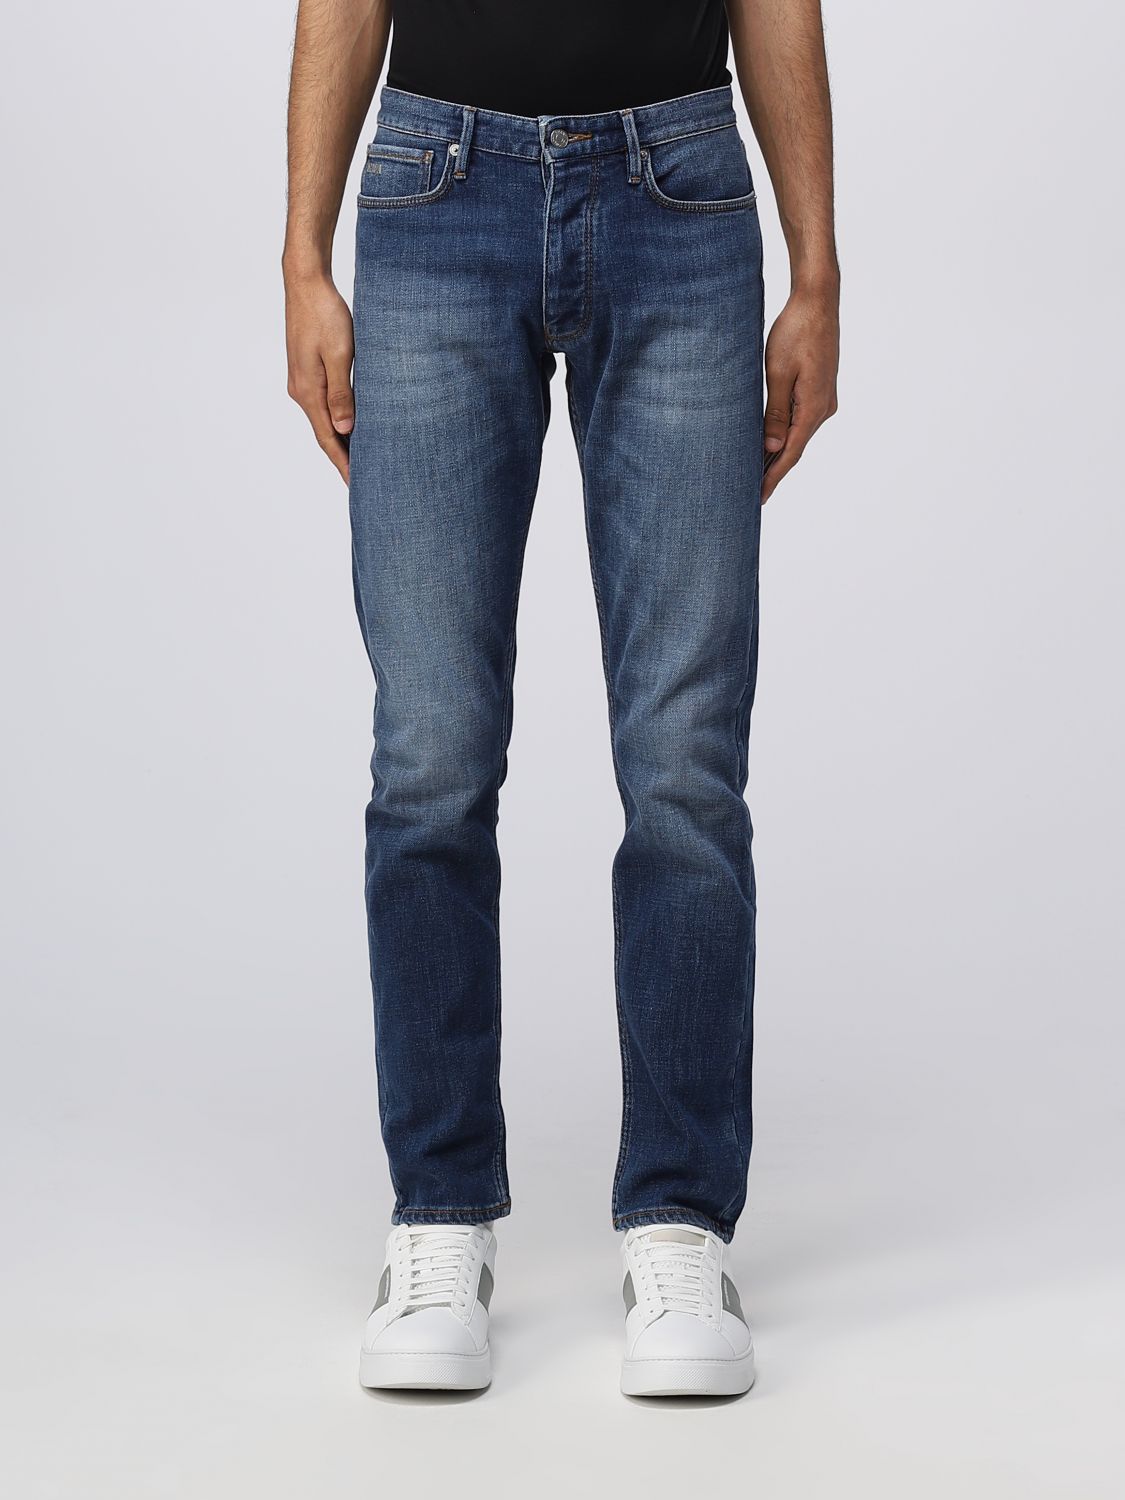 combinatie Ongemak ik ben trots EMPORIO ARMANI: jeans for man - Blue | Emporio Armani jeans 3R1J751D0DZ  online on GIGLIO.COM